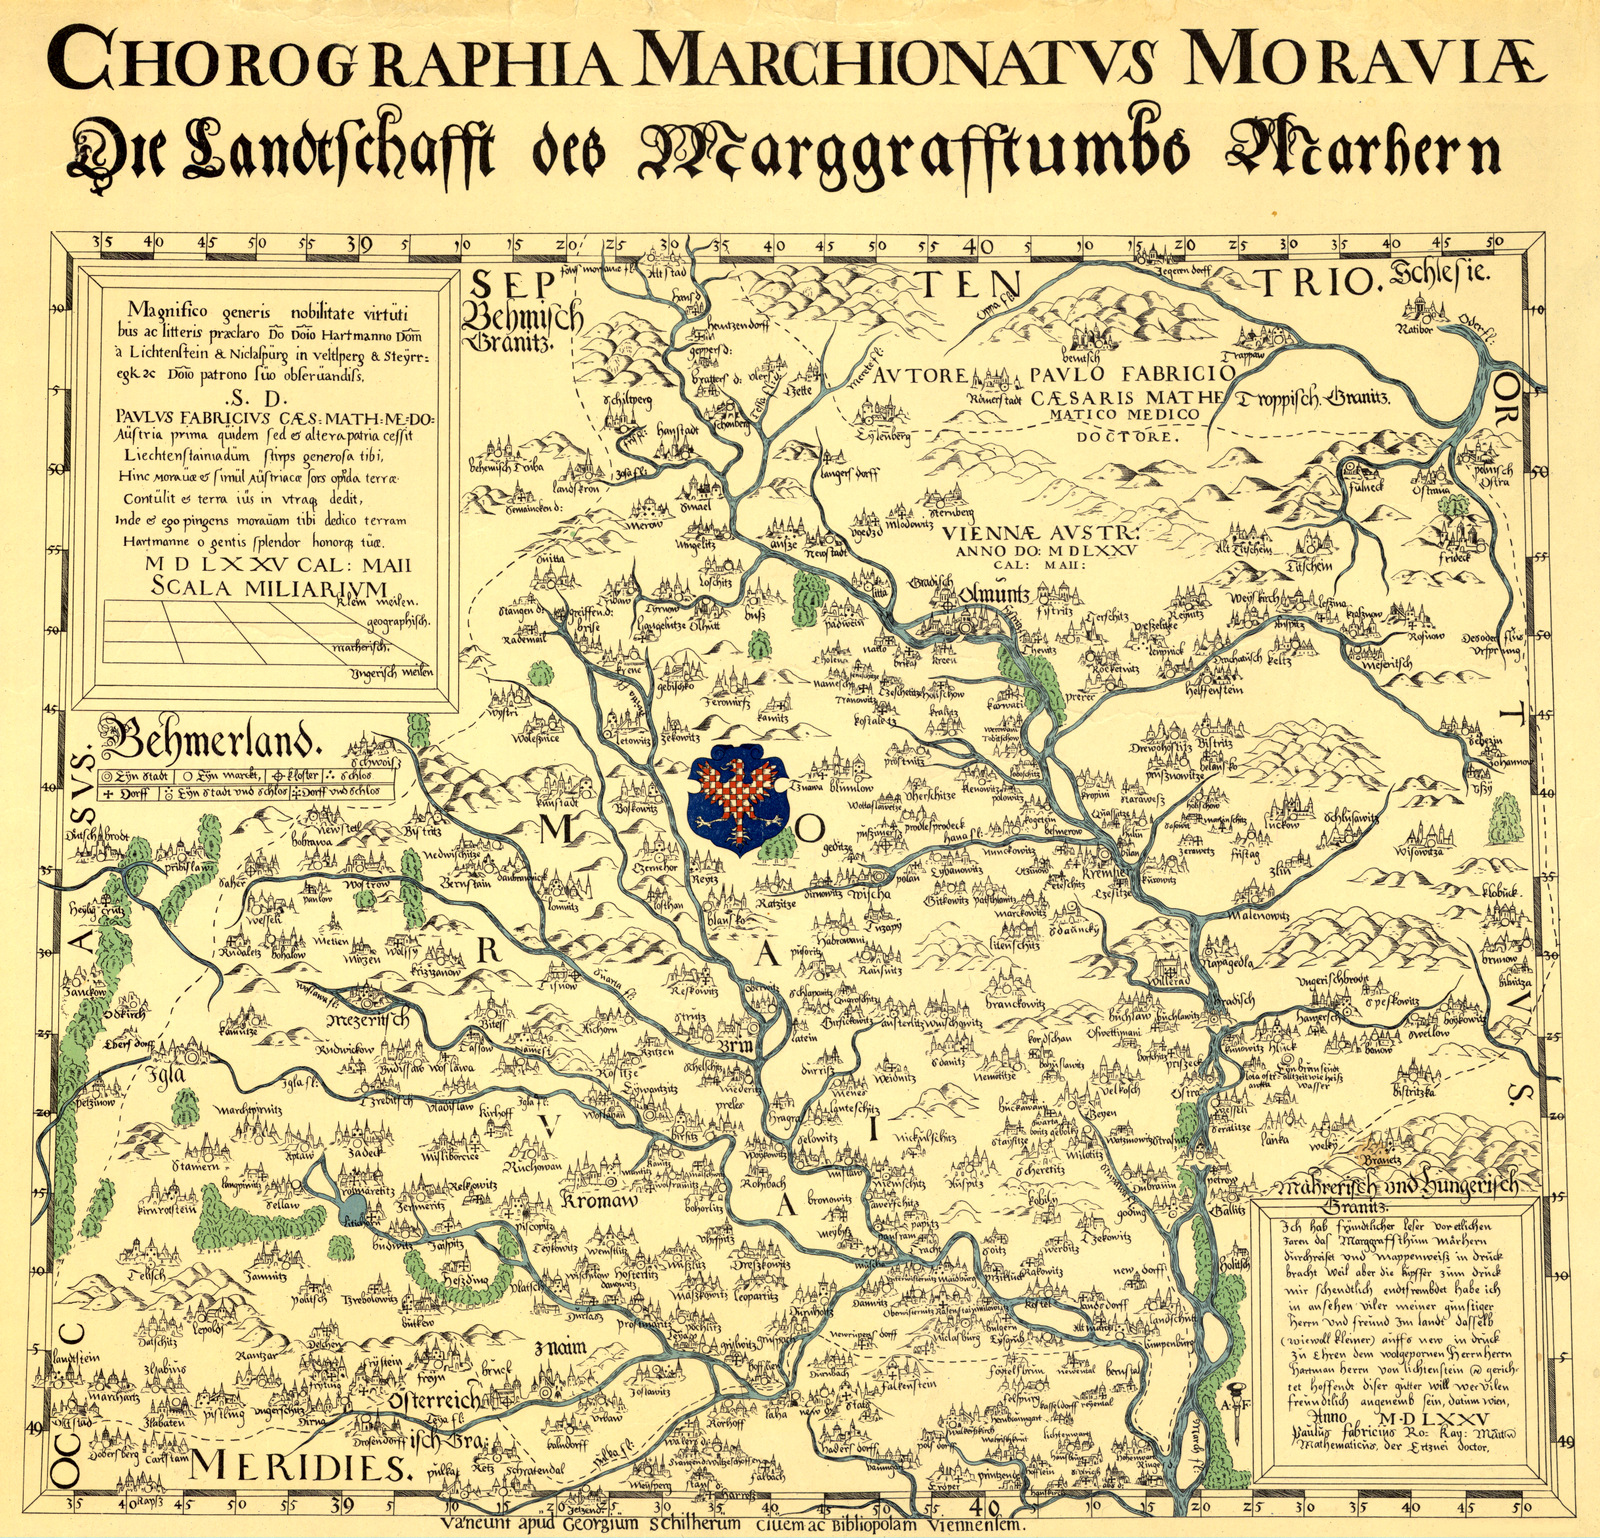 Fabriciova mapa Moravy - vydání z roku 1575 (zdroj: https://cs.wikipedia.org/wiki/Fabriciova_mapa)